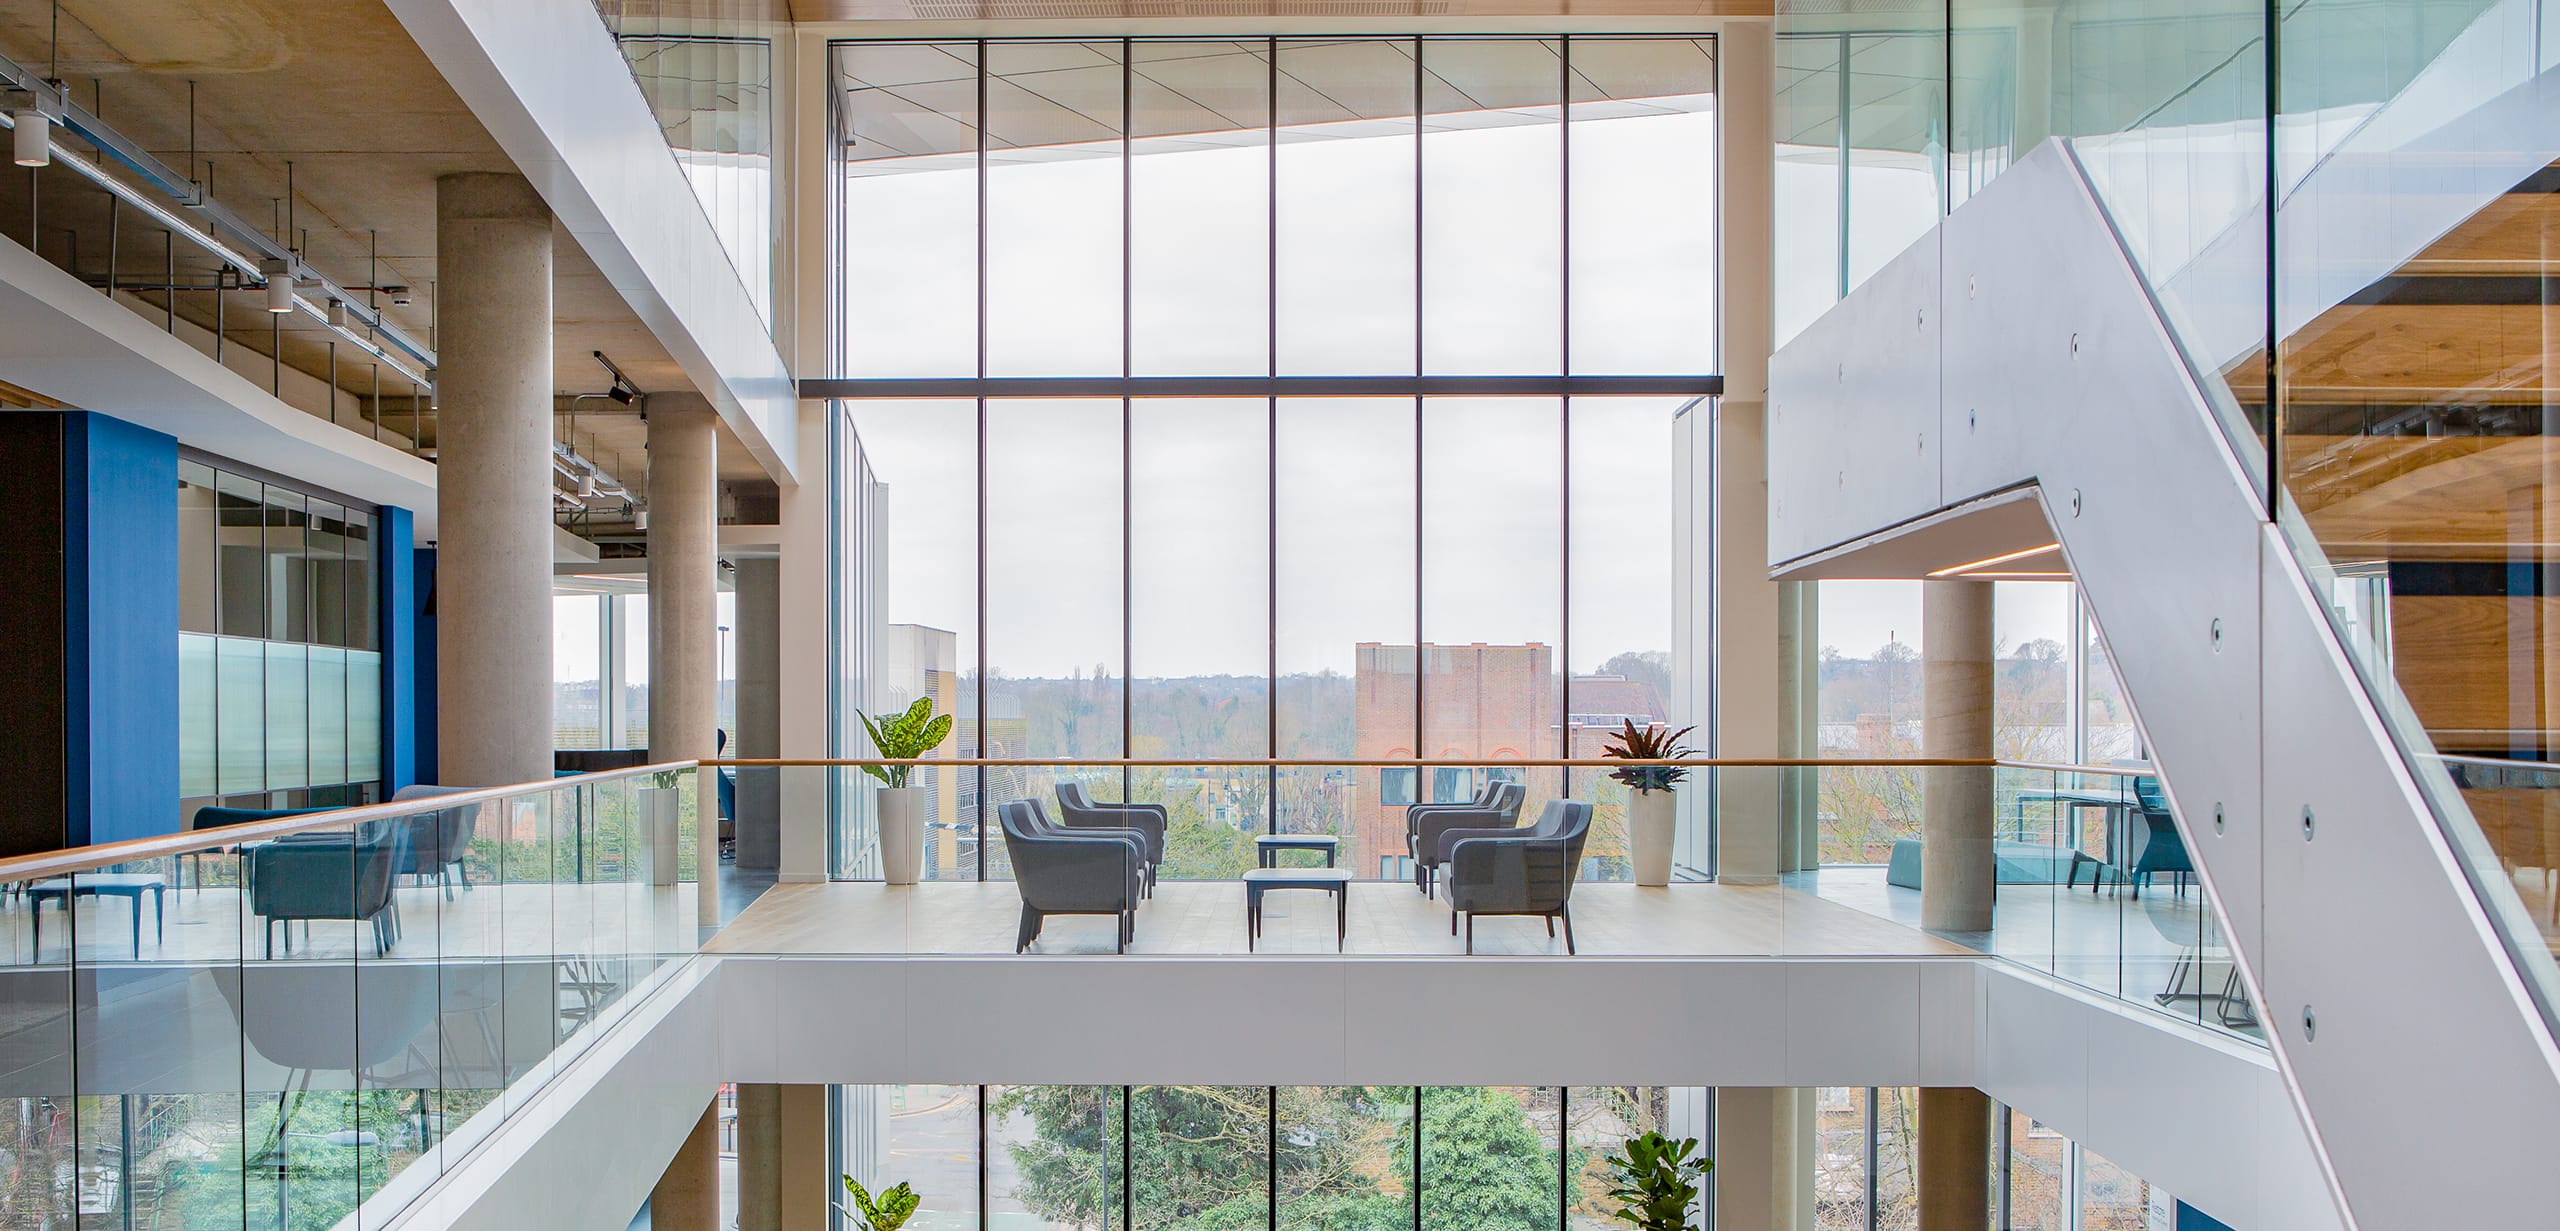 A glass atrium in a modern office building.